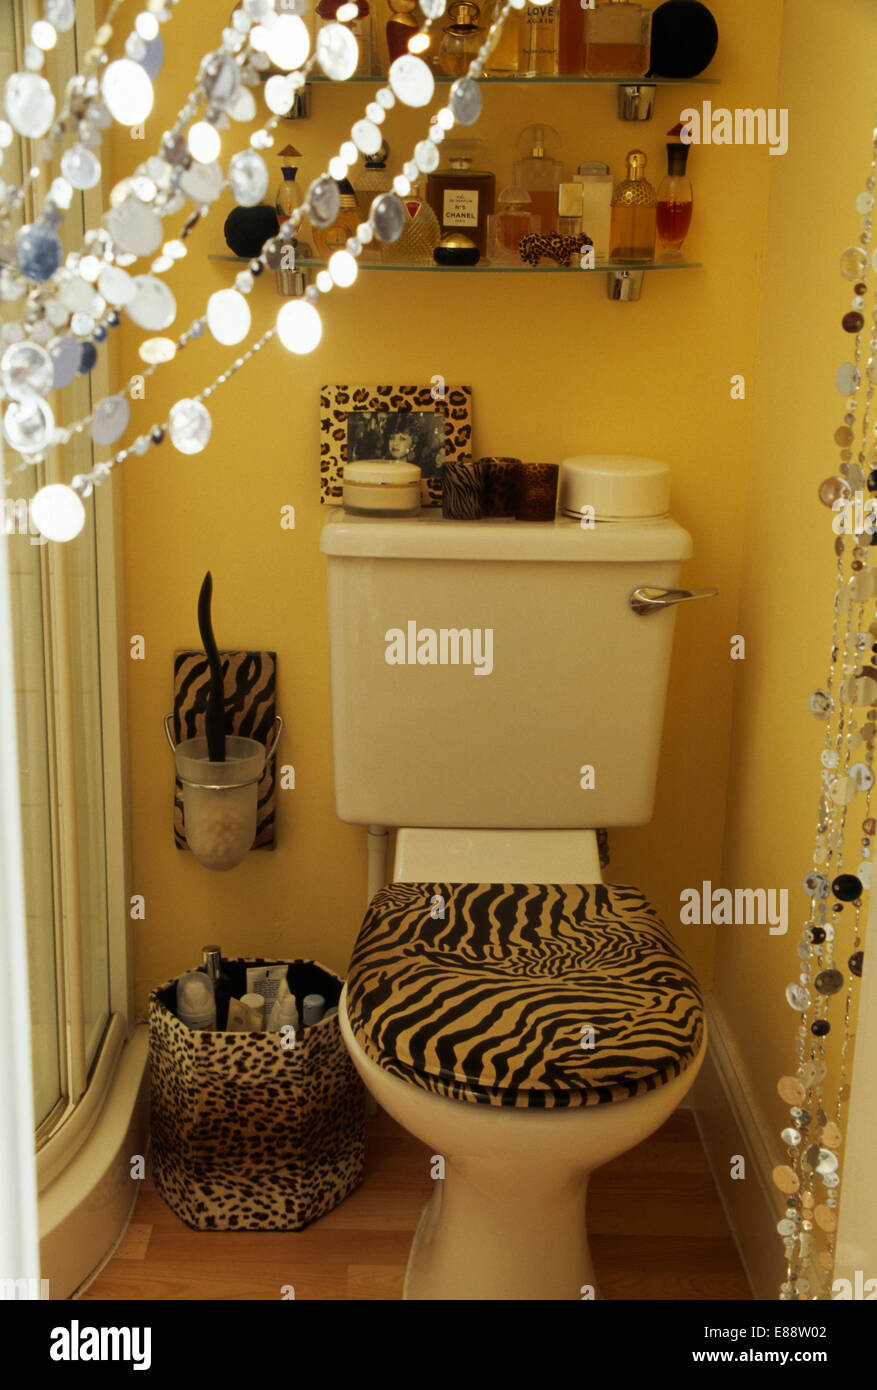 Animal-print seat on toilet in small bathroom with animal-print waste-bin Stock Photo